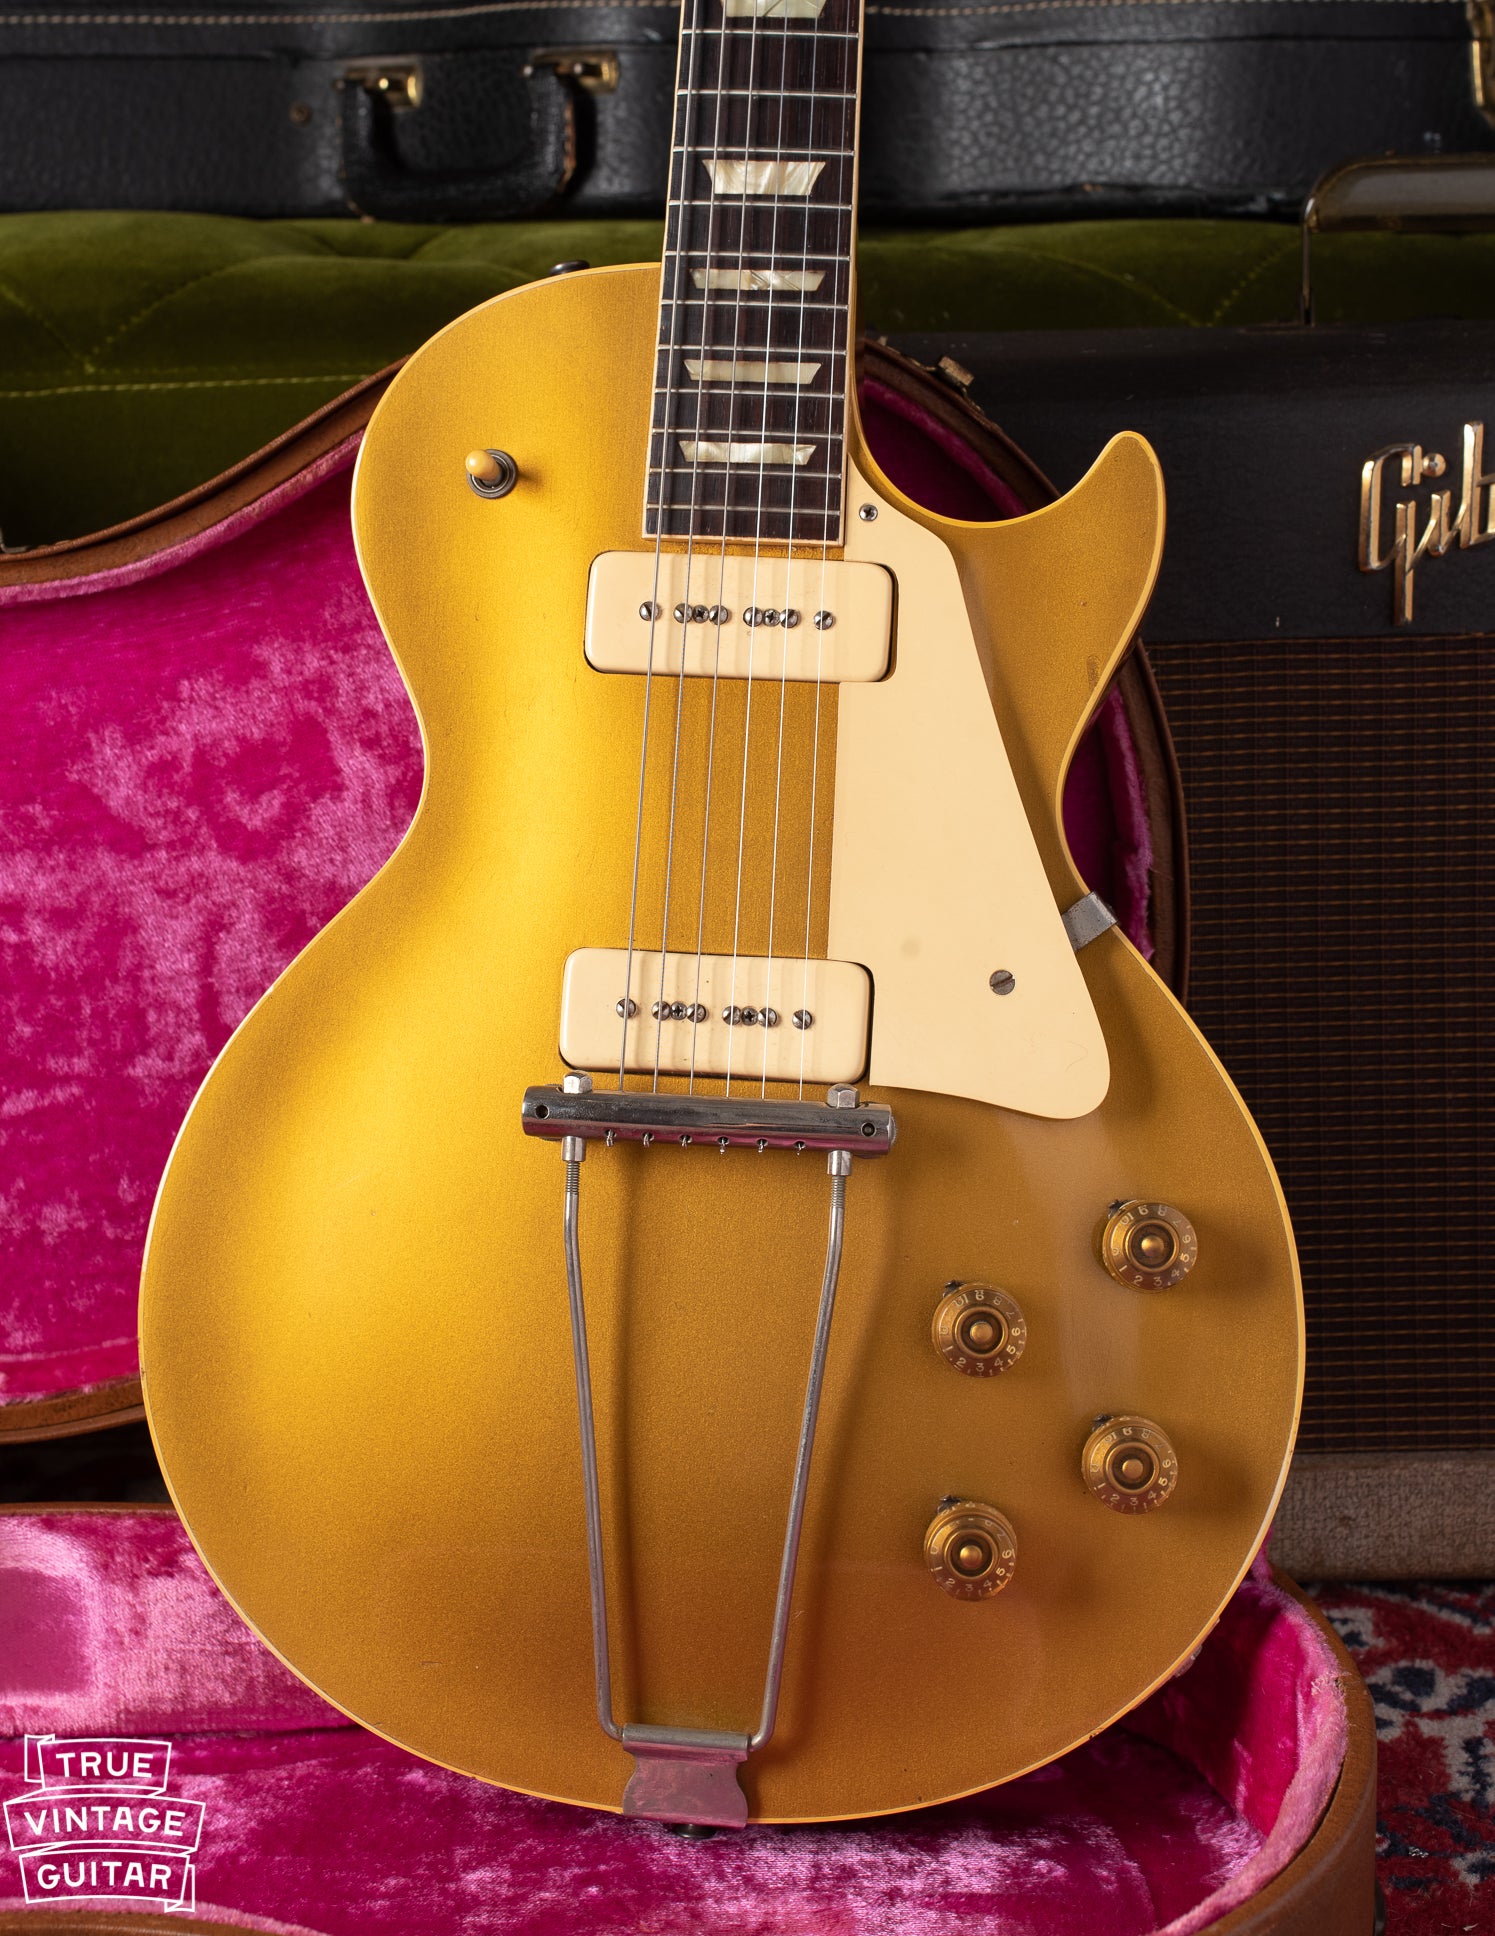 1952 Gibson Les Paul Model goldtop guitar in pink case 